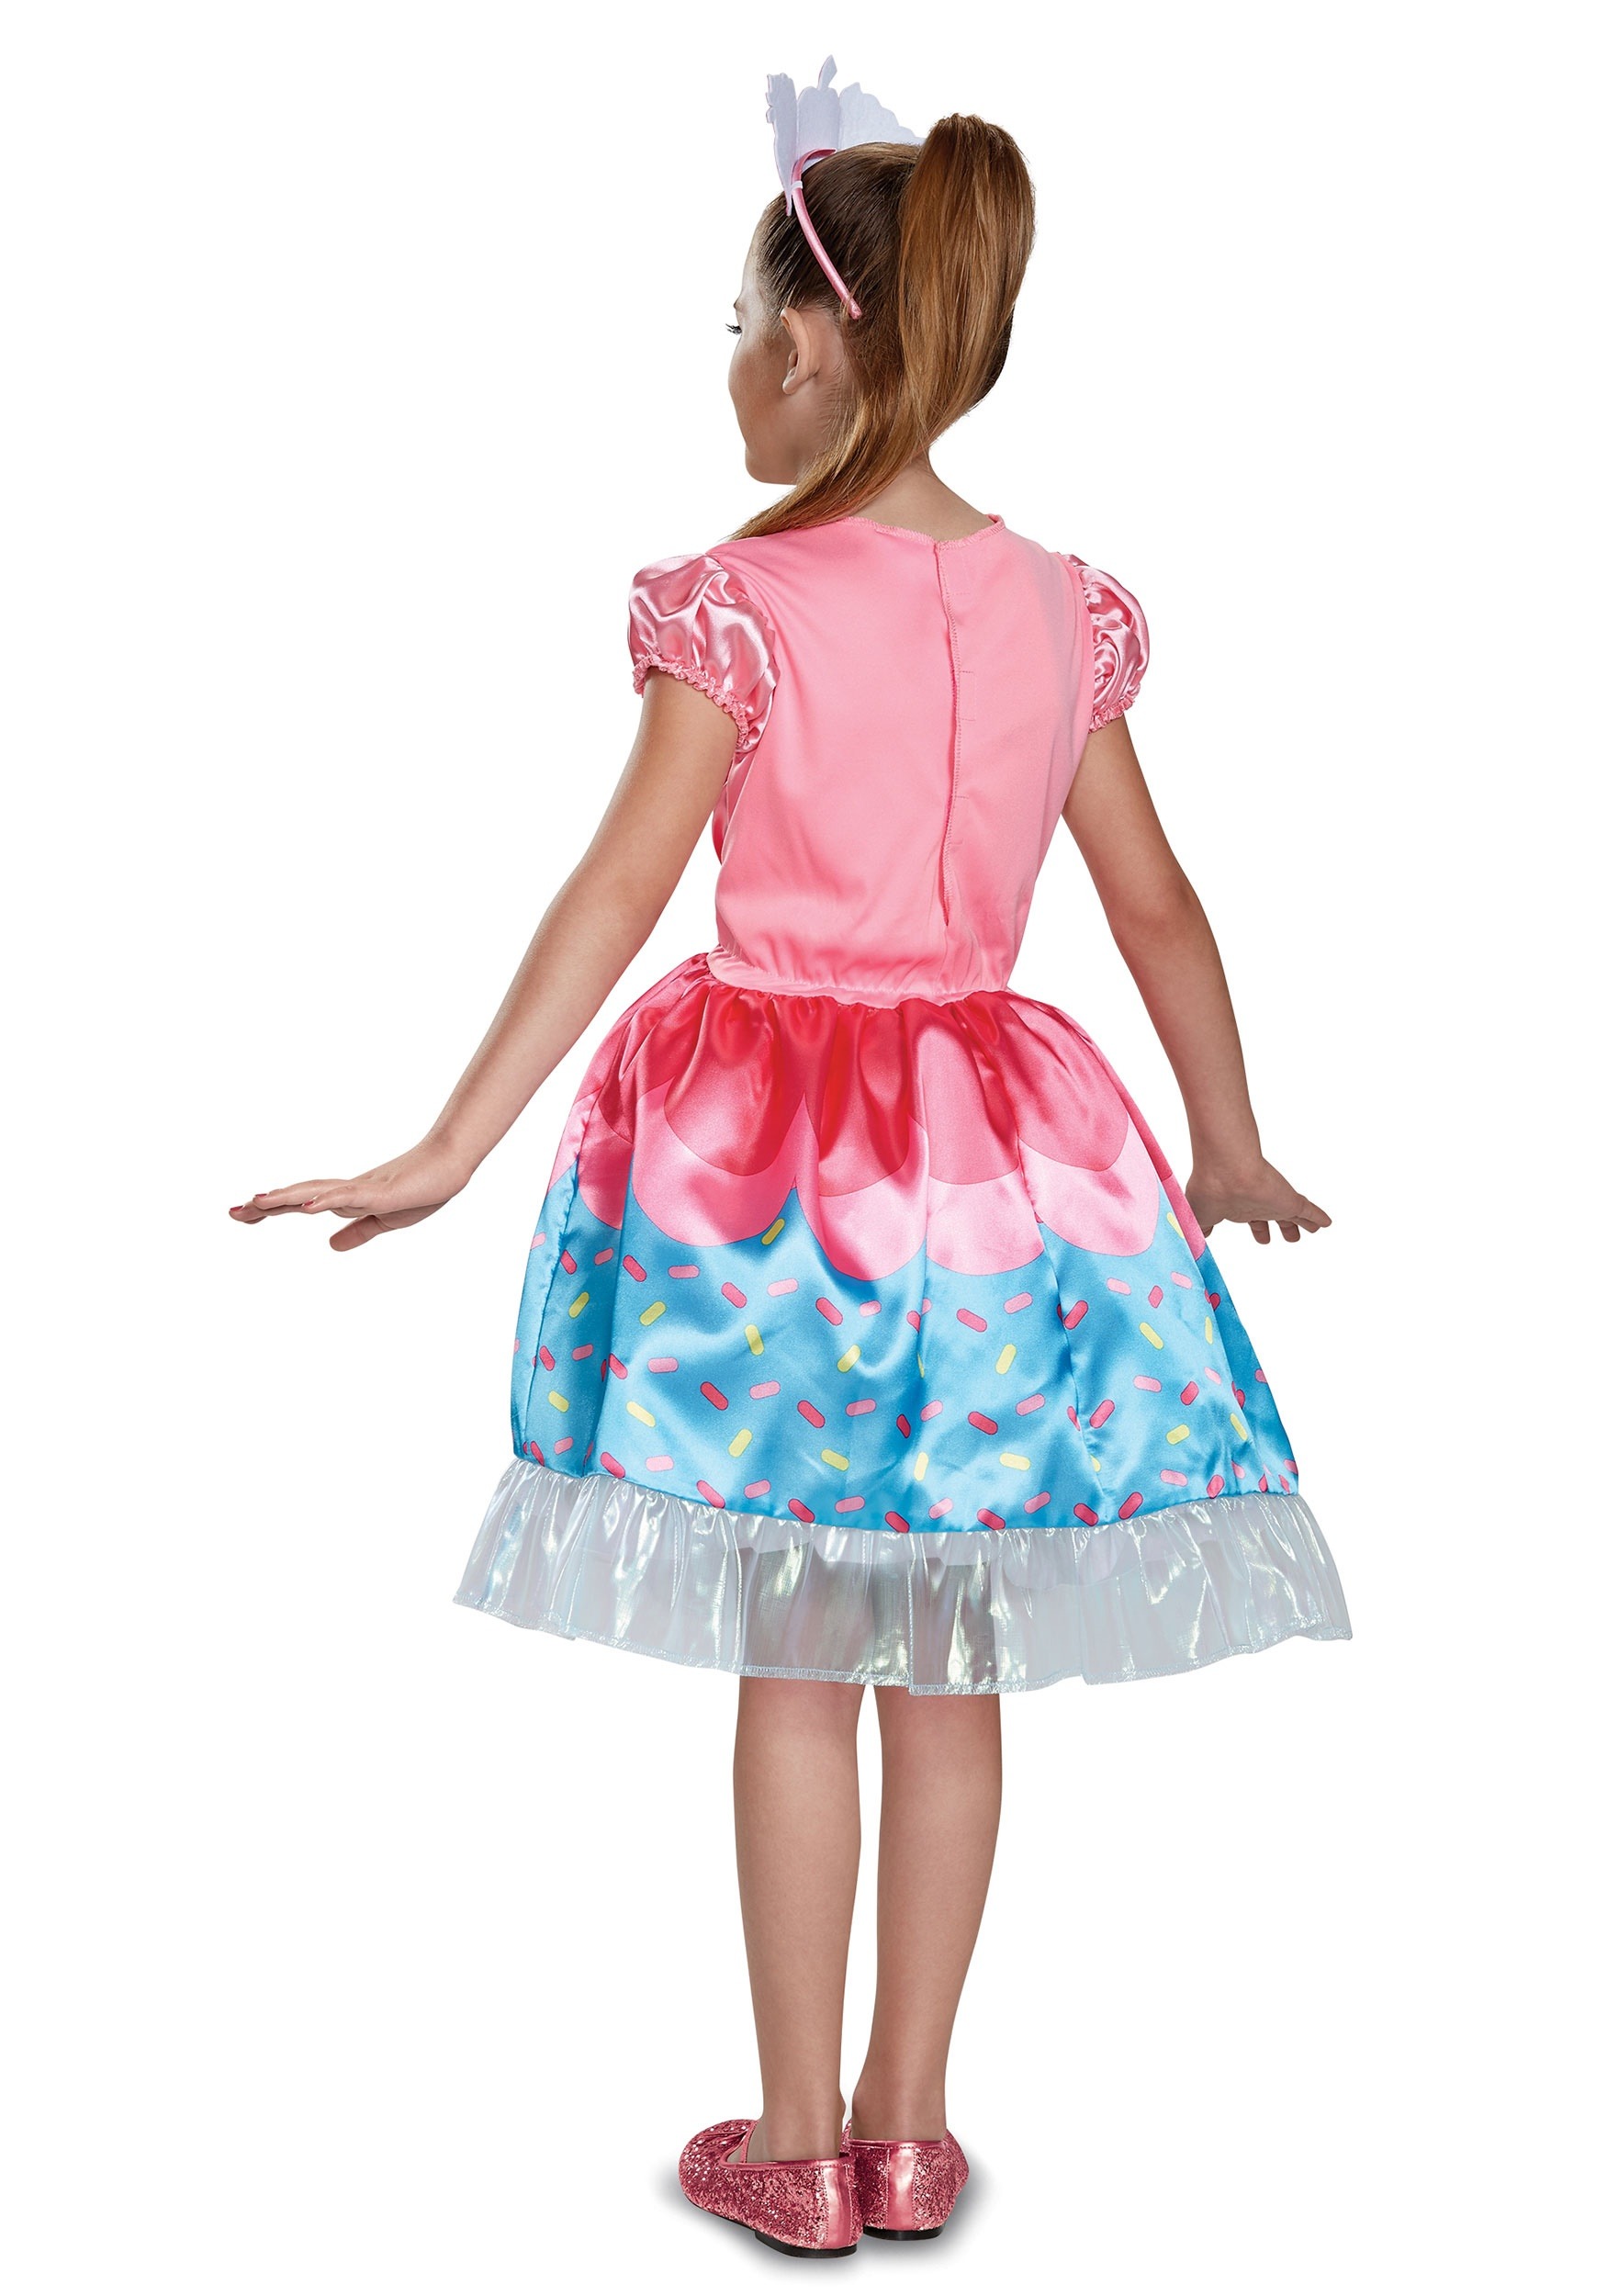 Jessicake Classic Child Costume from Shopkins